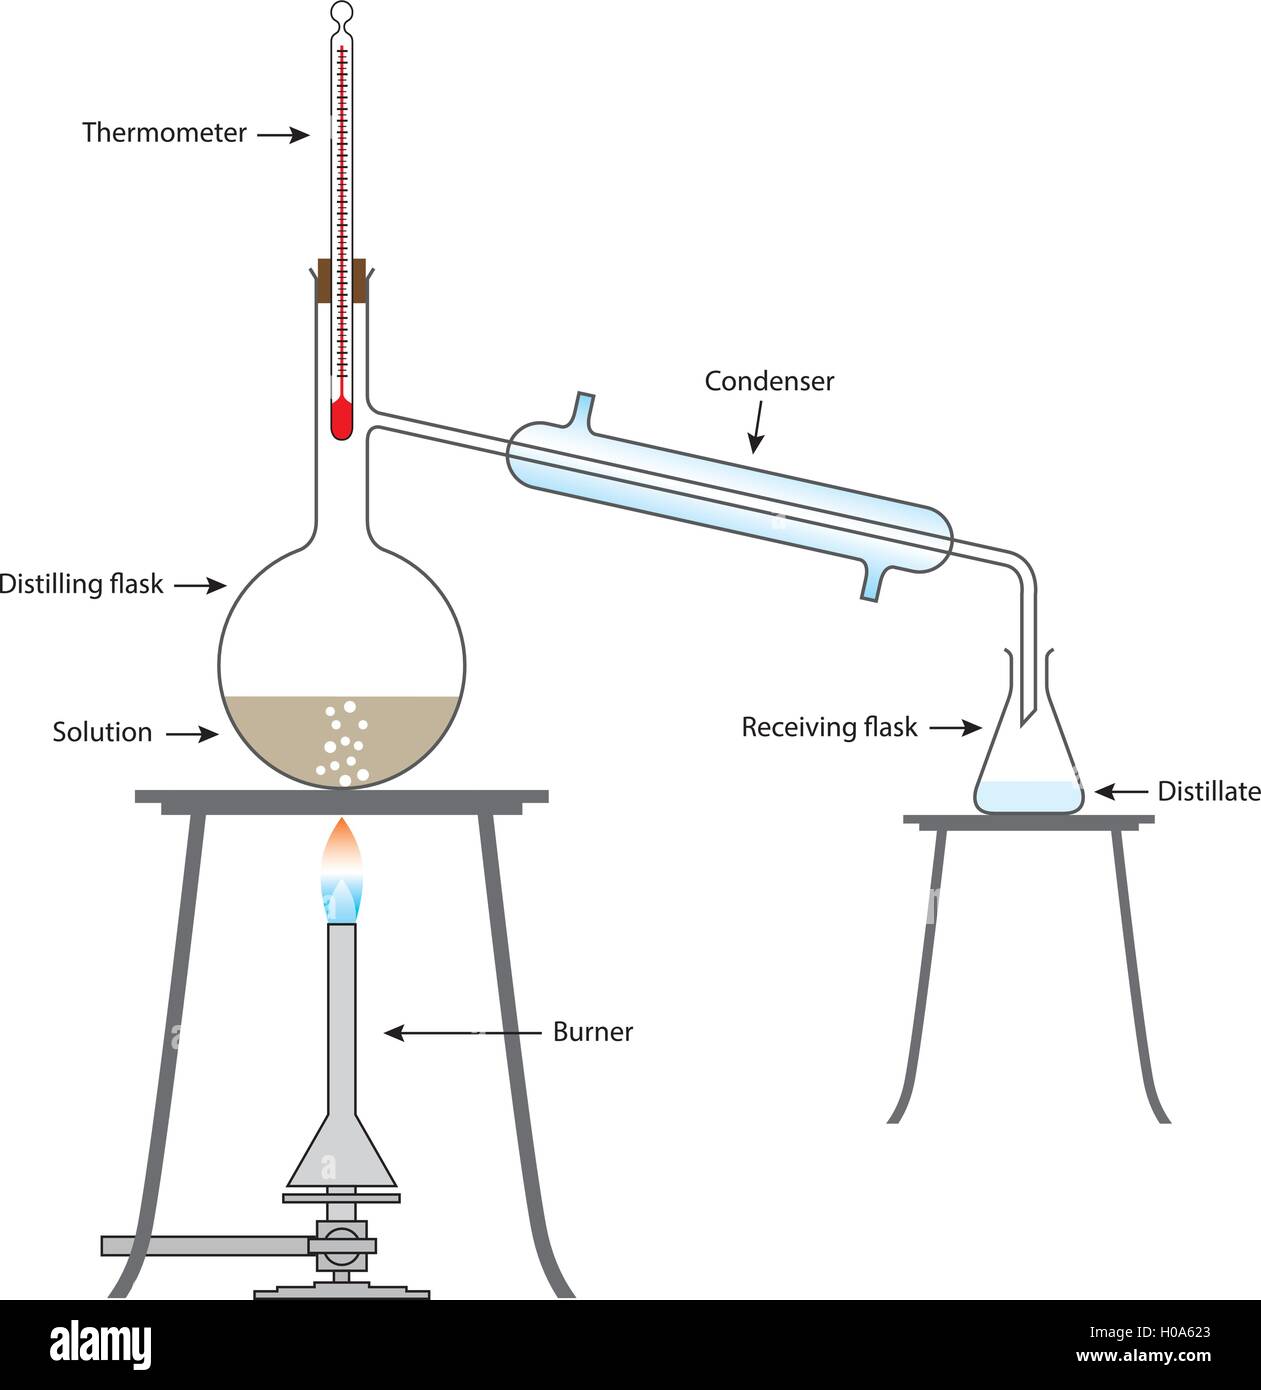 How To Draw Distillation Diagram